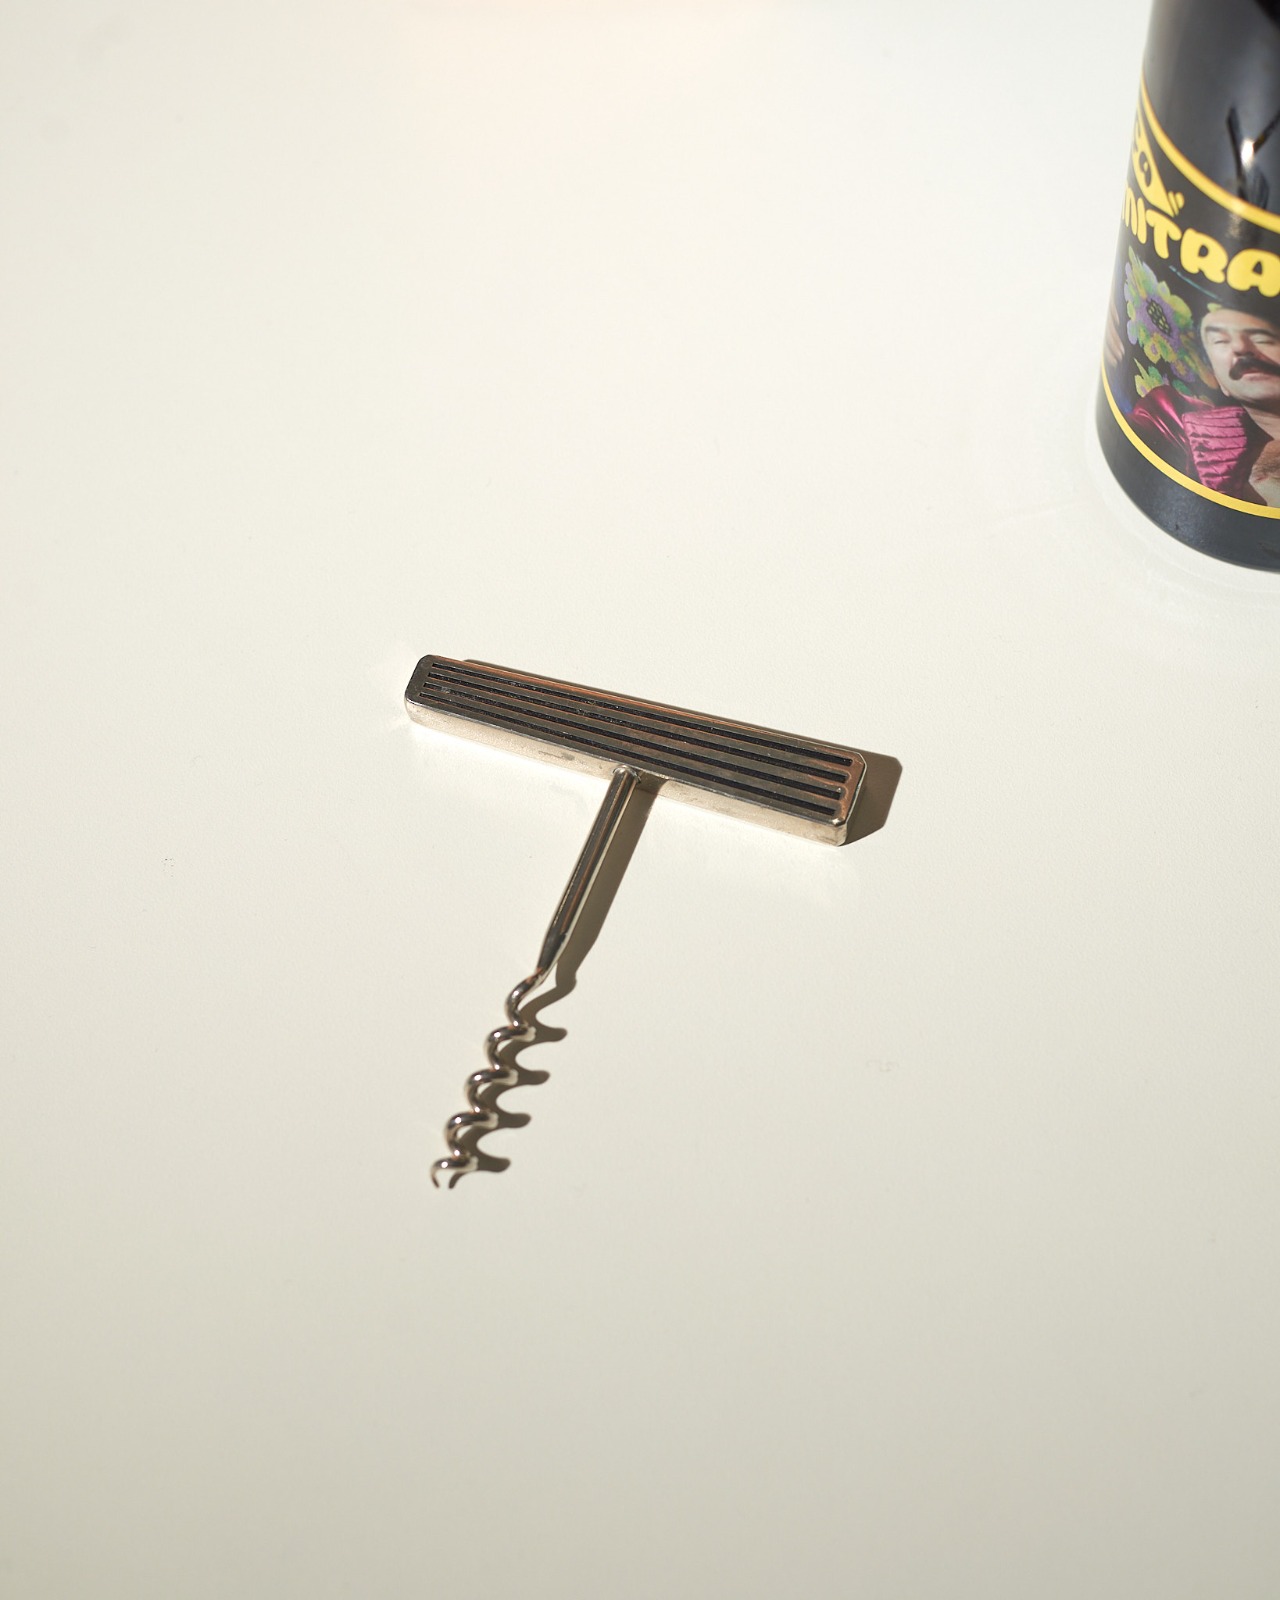 Metal Cork screw